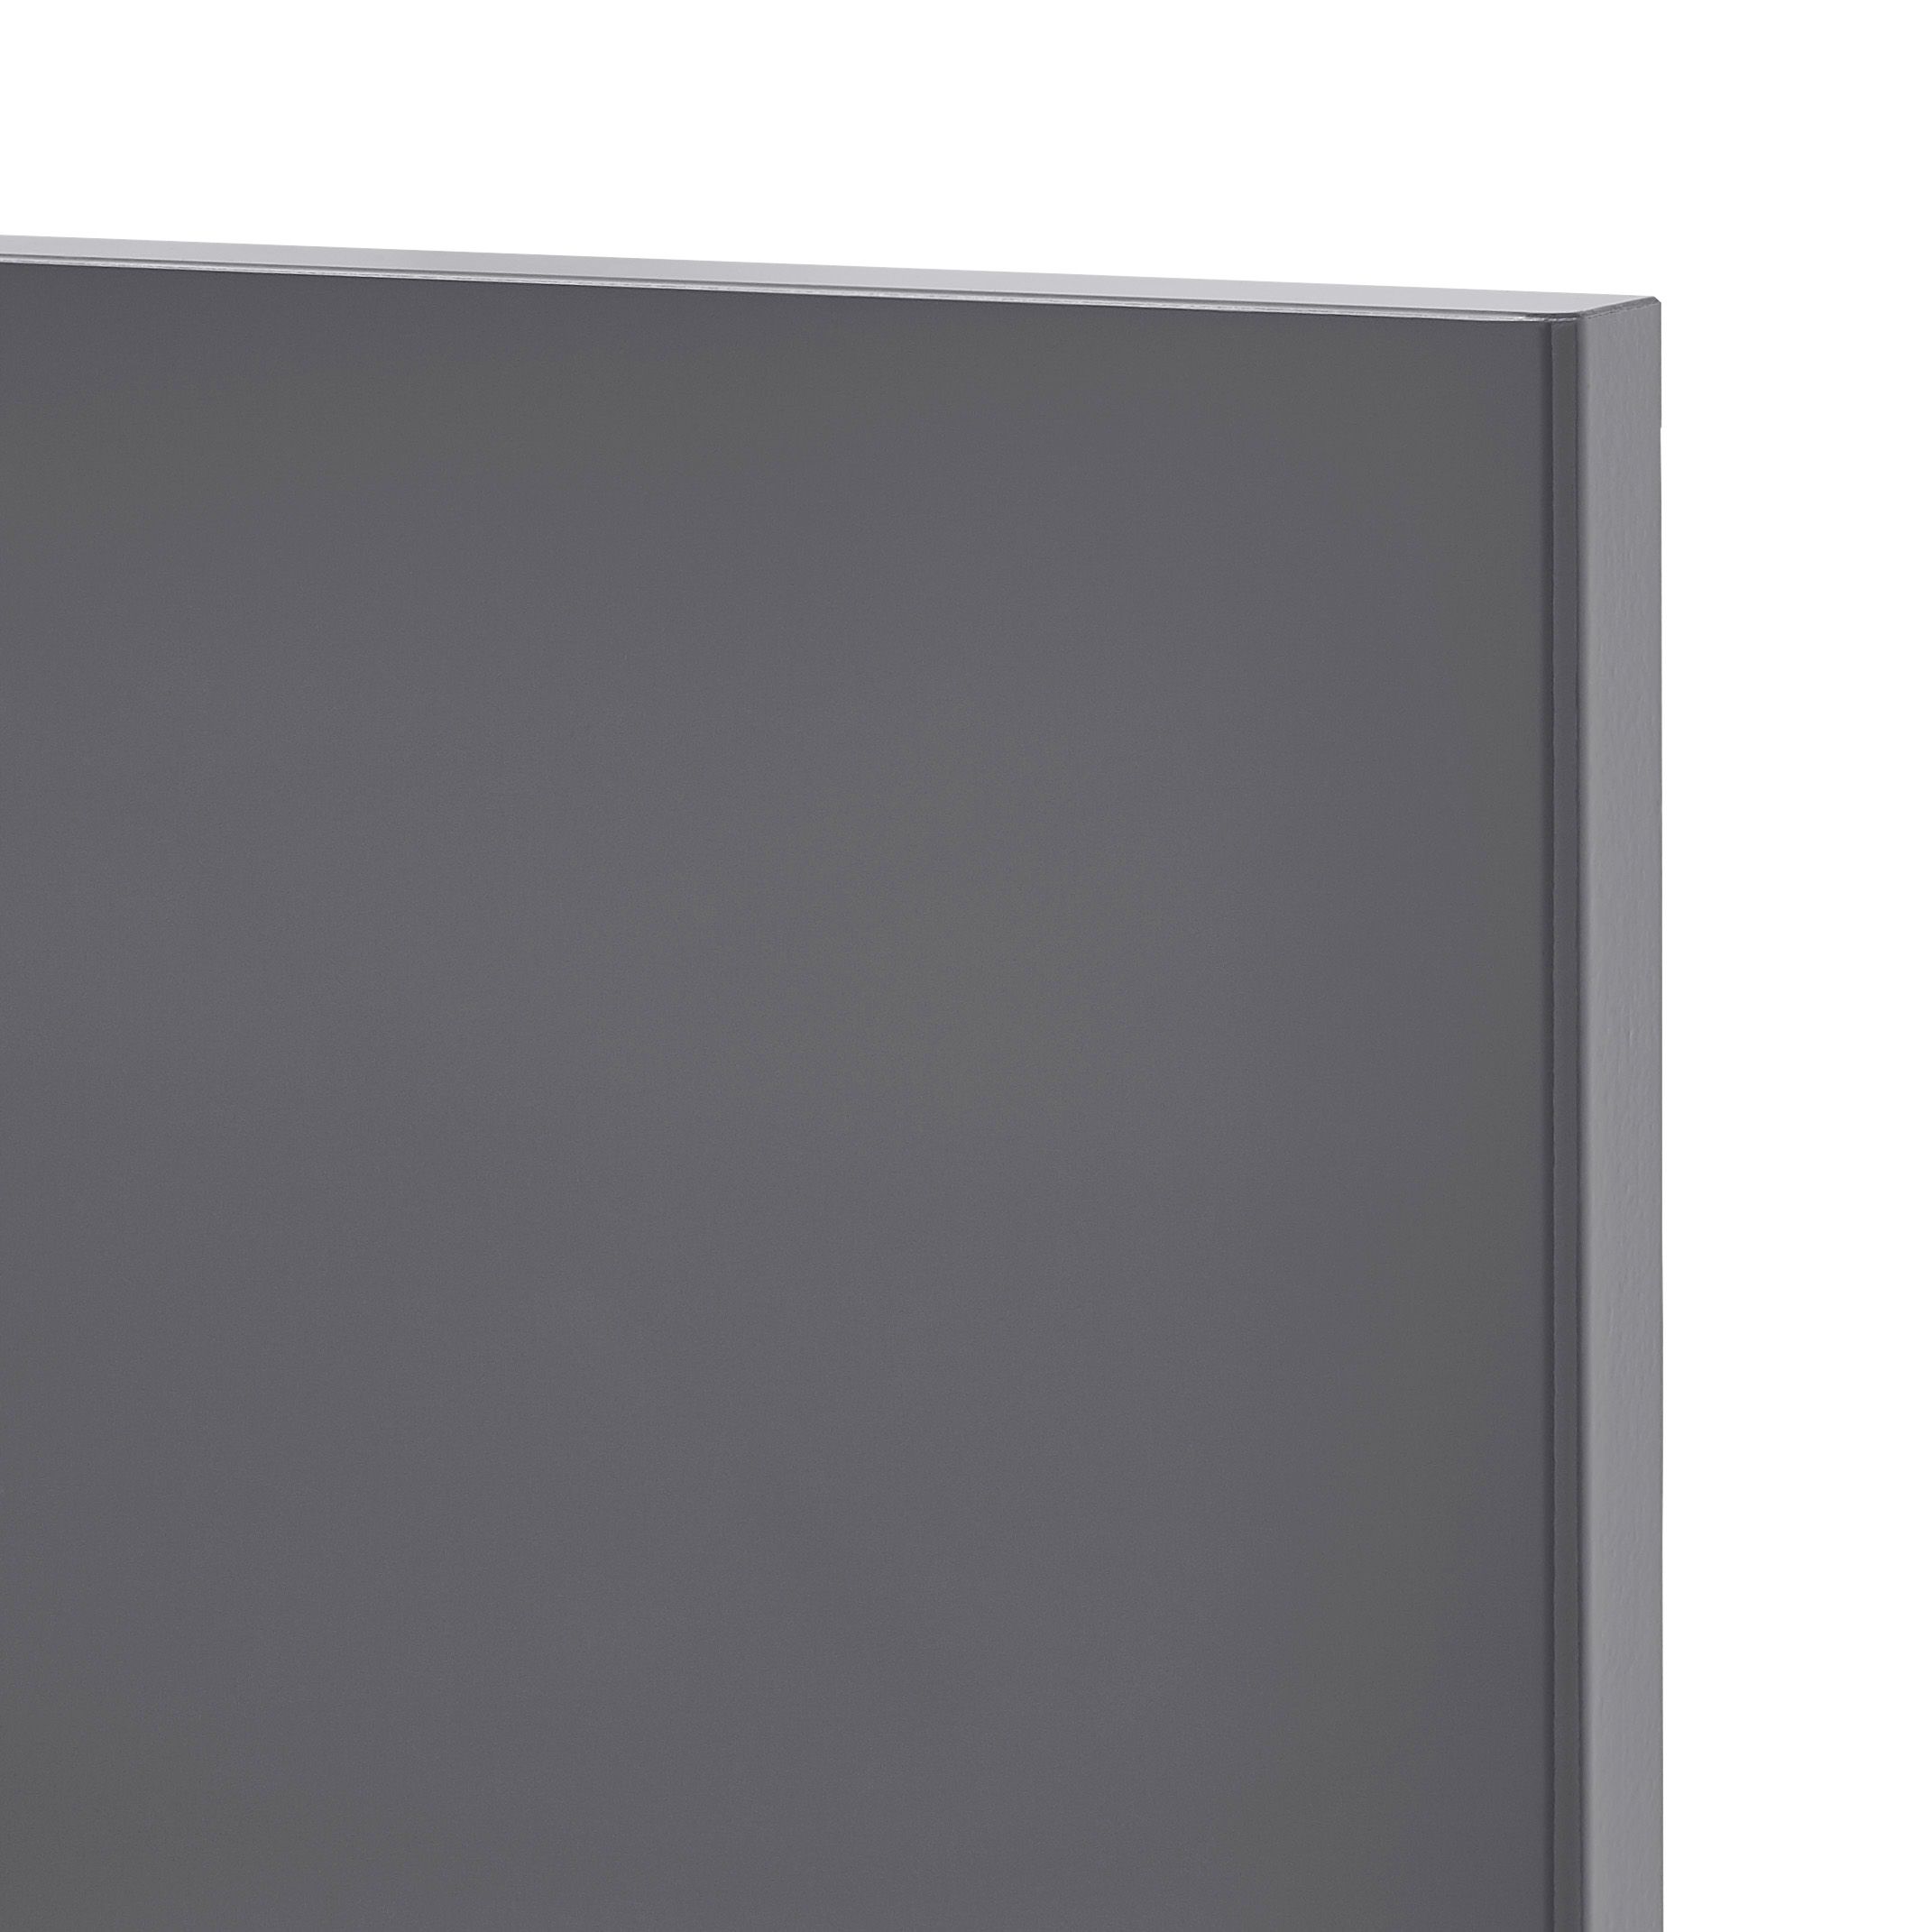 GoodHome Stevia Gloss anthracite slab Drawer front, bridging door & bi fold door, (W)600mm (H)356mm (T)18mm